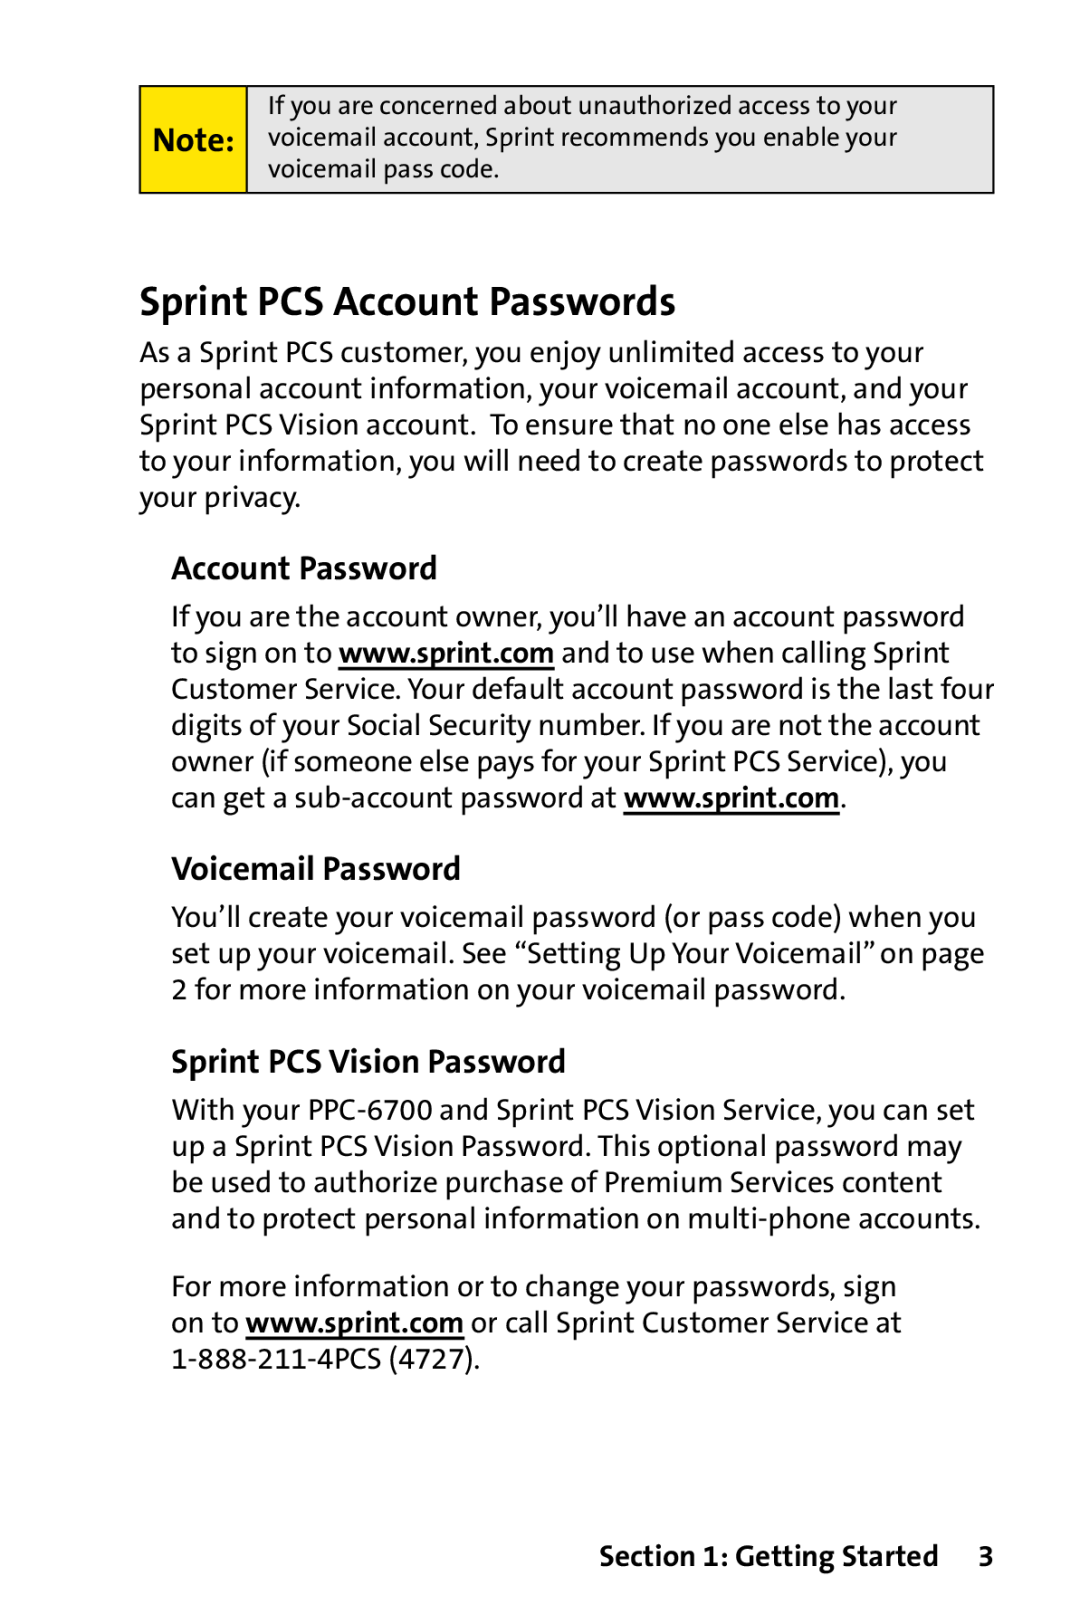 Sprint Nextel PPC-6700 manual Sprint PCS Account Passwords, Voicemail Password, Sprint PCS Vision Password, Getting Started 